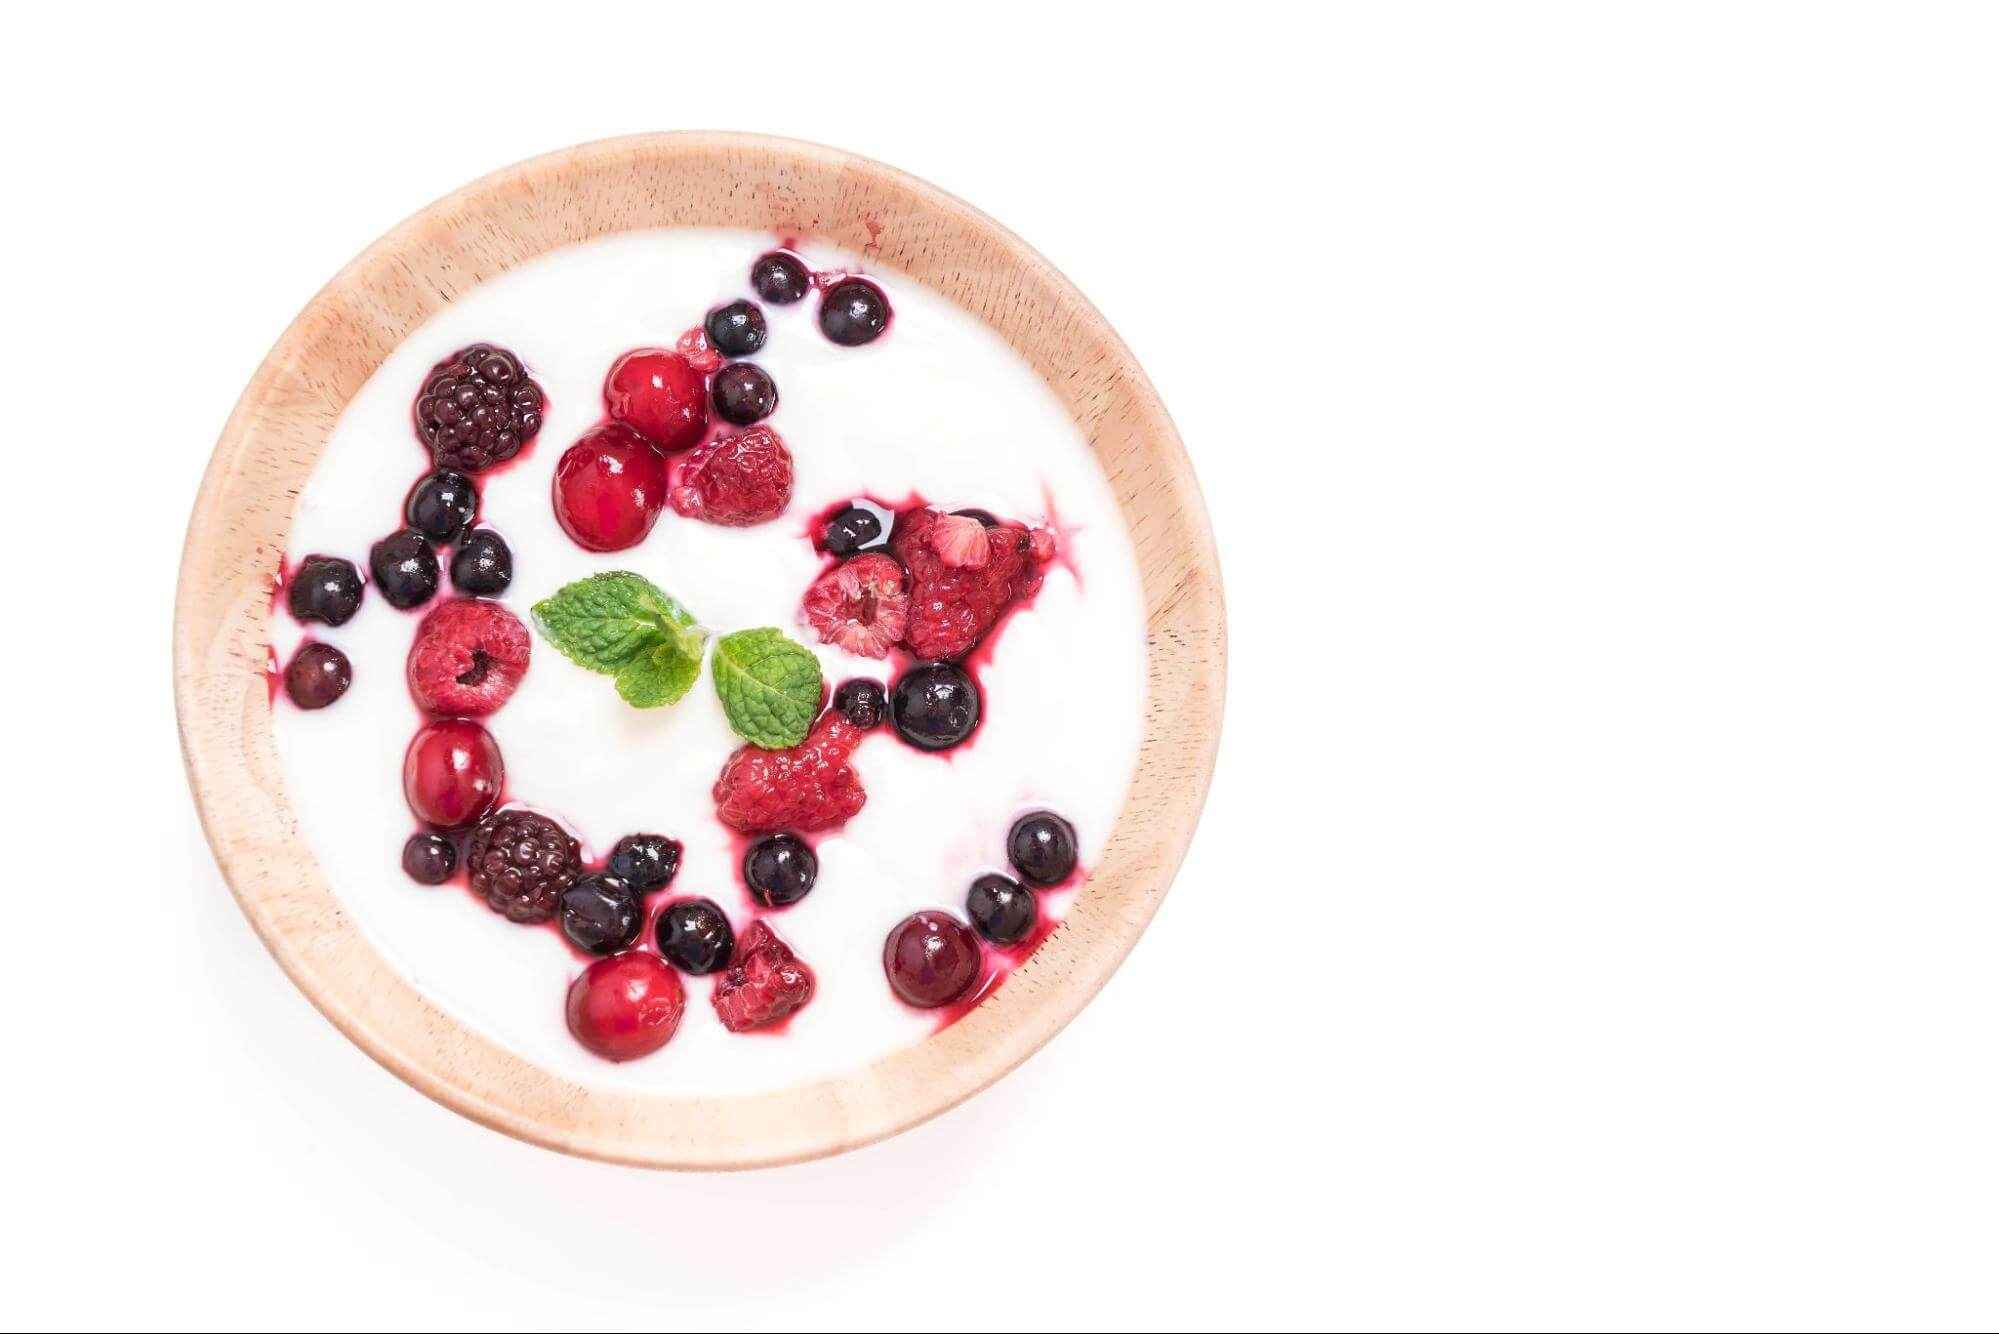 Greek Yogurt with Fruits in a bowl